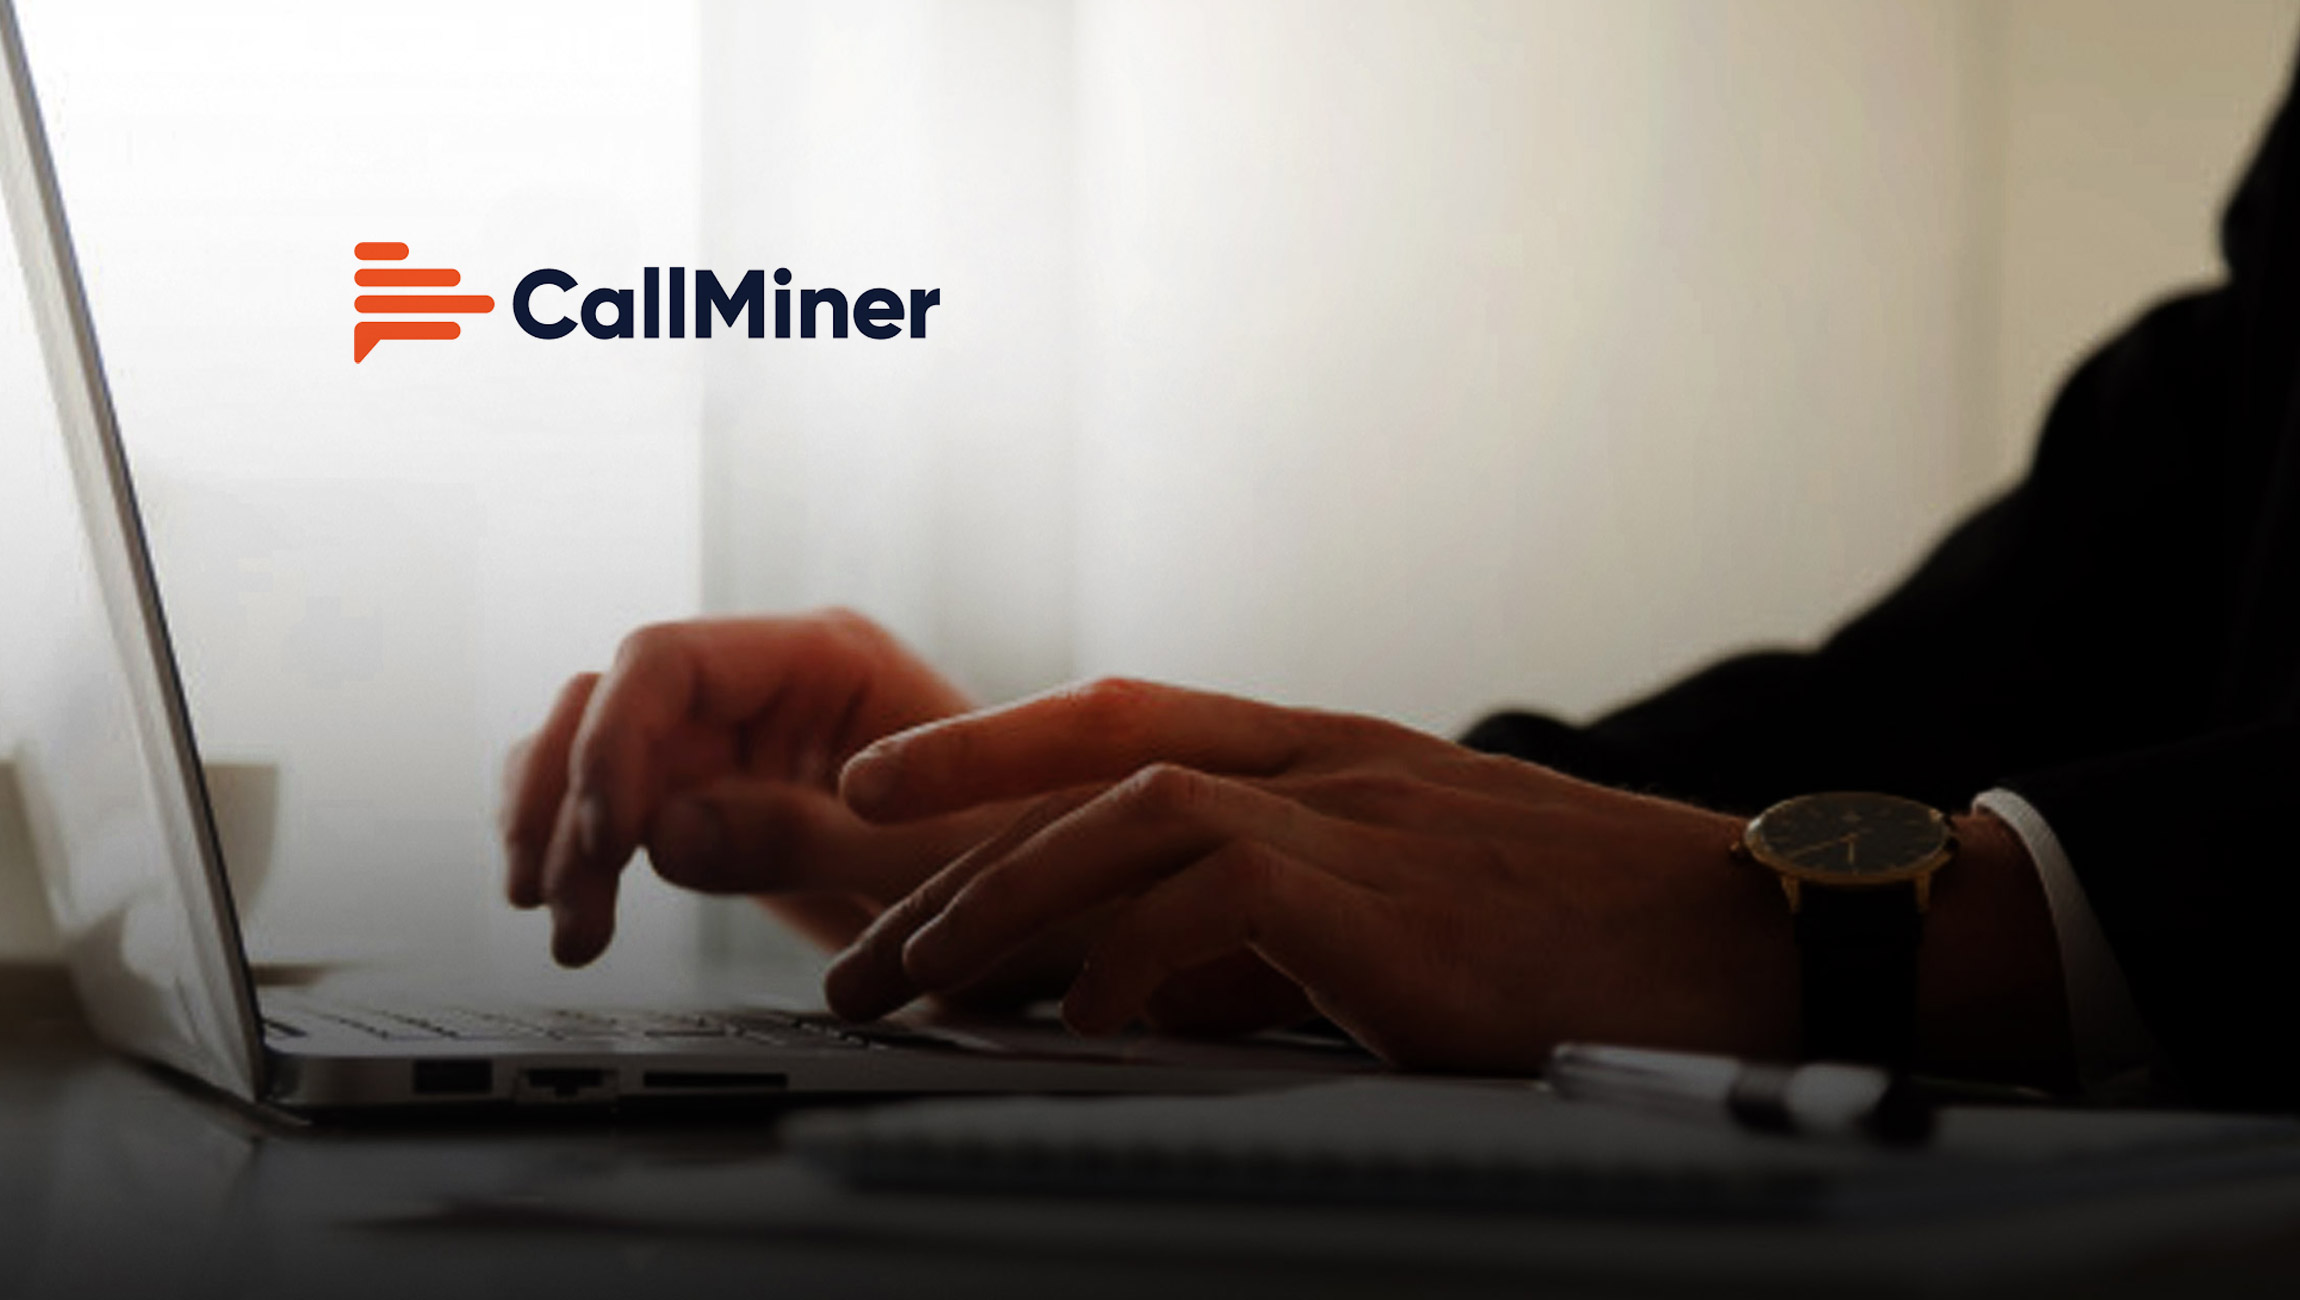 CallMiner Announces CallMiner for Salesforce on Salesforce AppExchange, the World's Leading Enterprise Cloud Marketplace